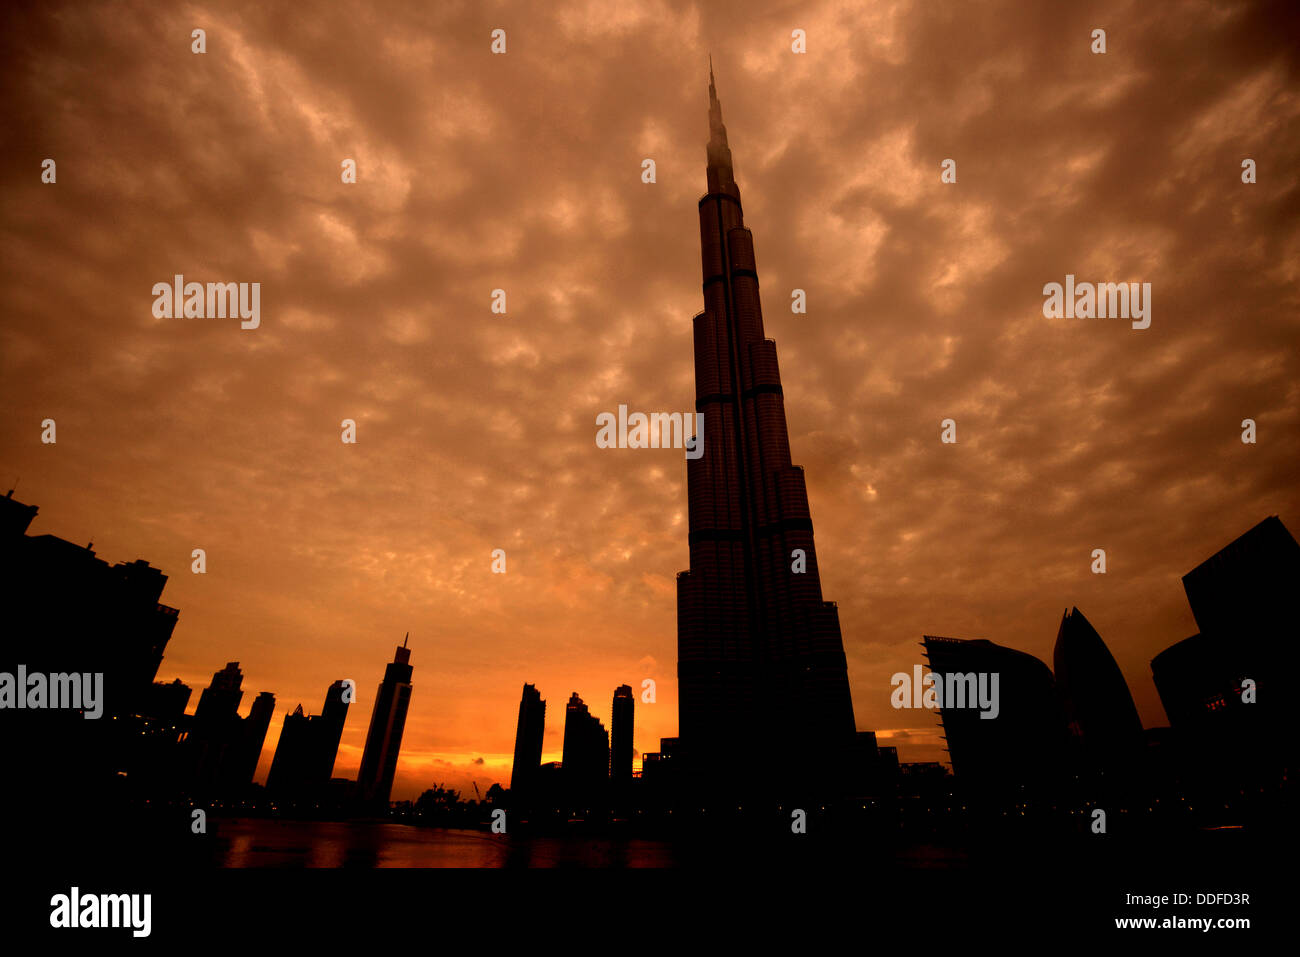 Burj Khalifa skyscraper, exterior of Burj Khalifa skyscraper at sunset, Dubai, United Arab Emirates Stock Photo